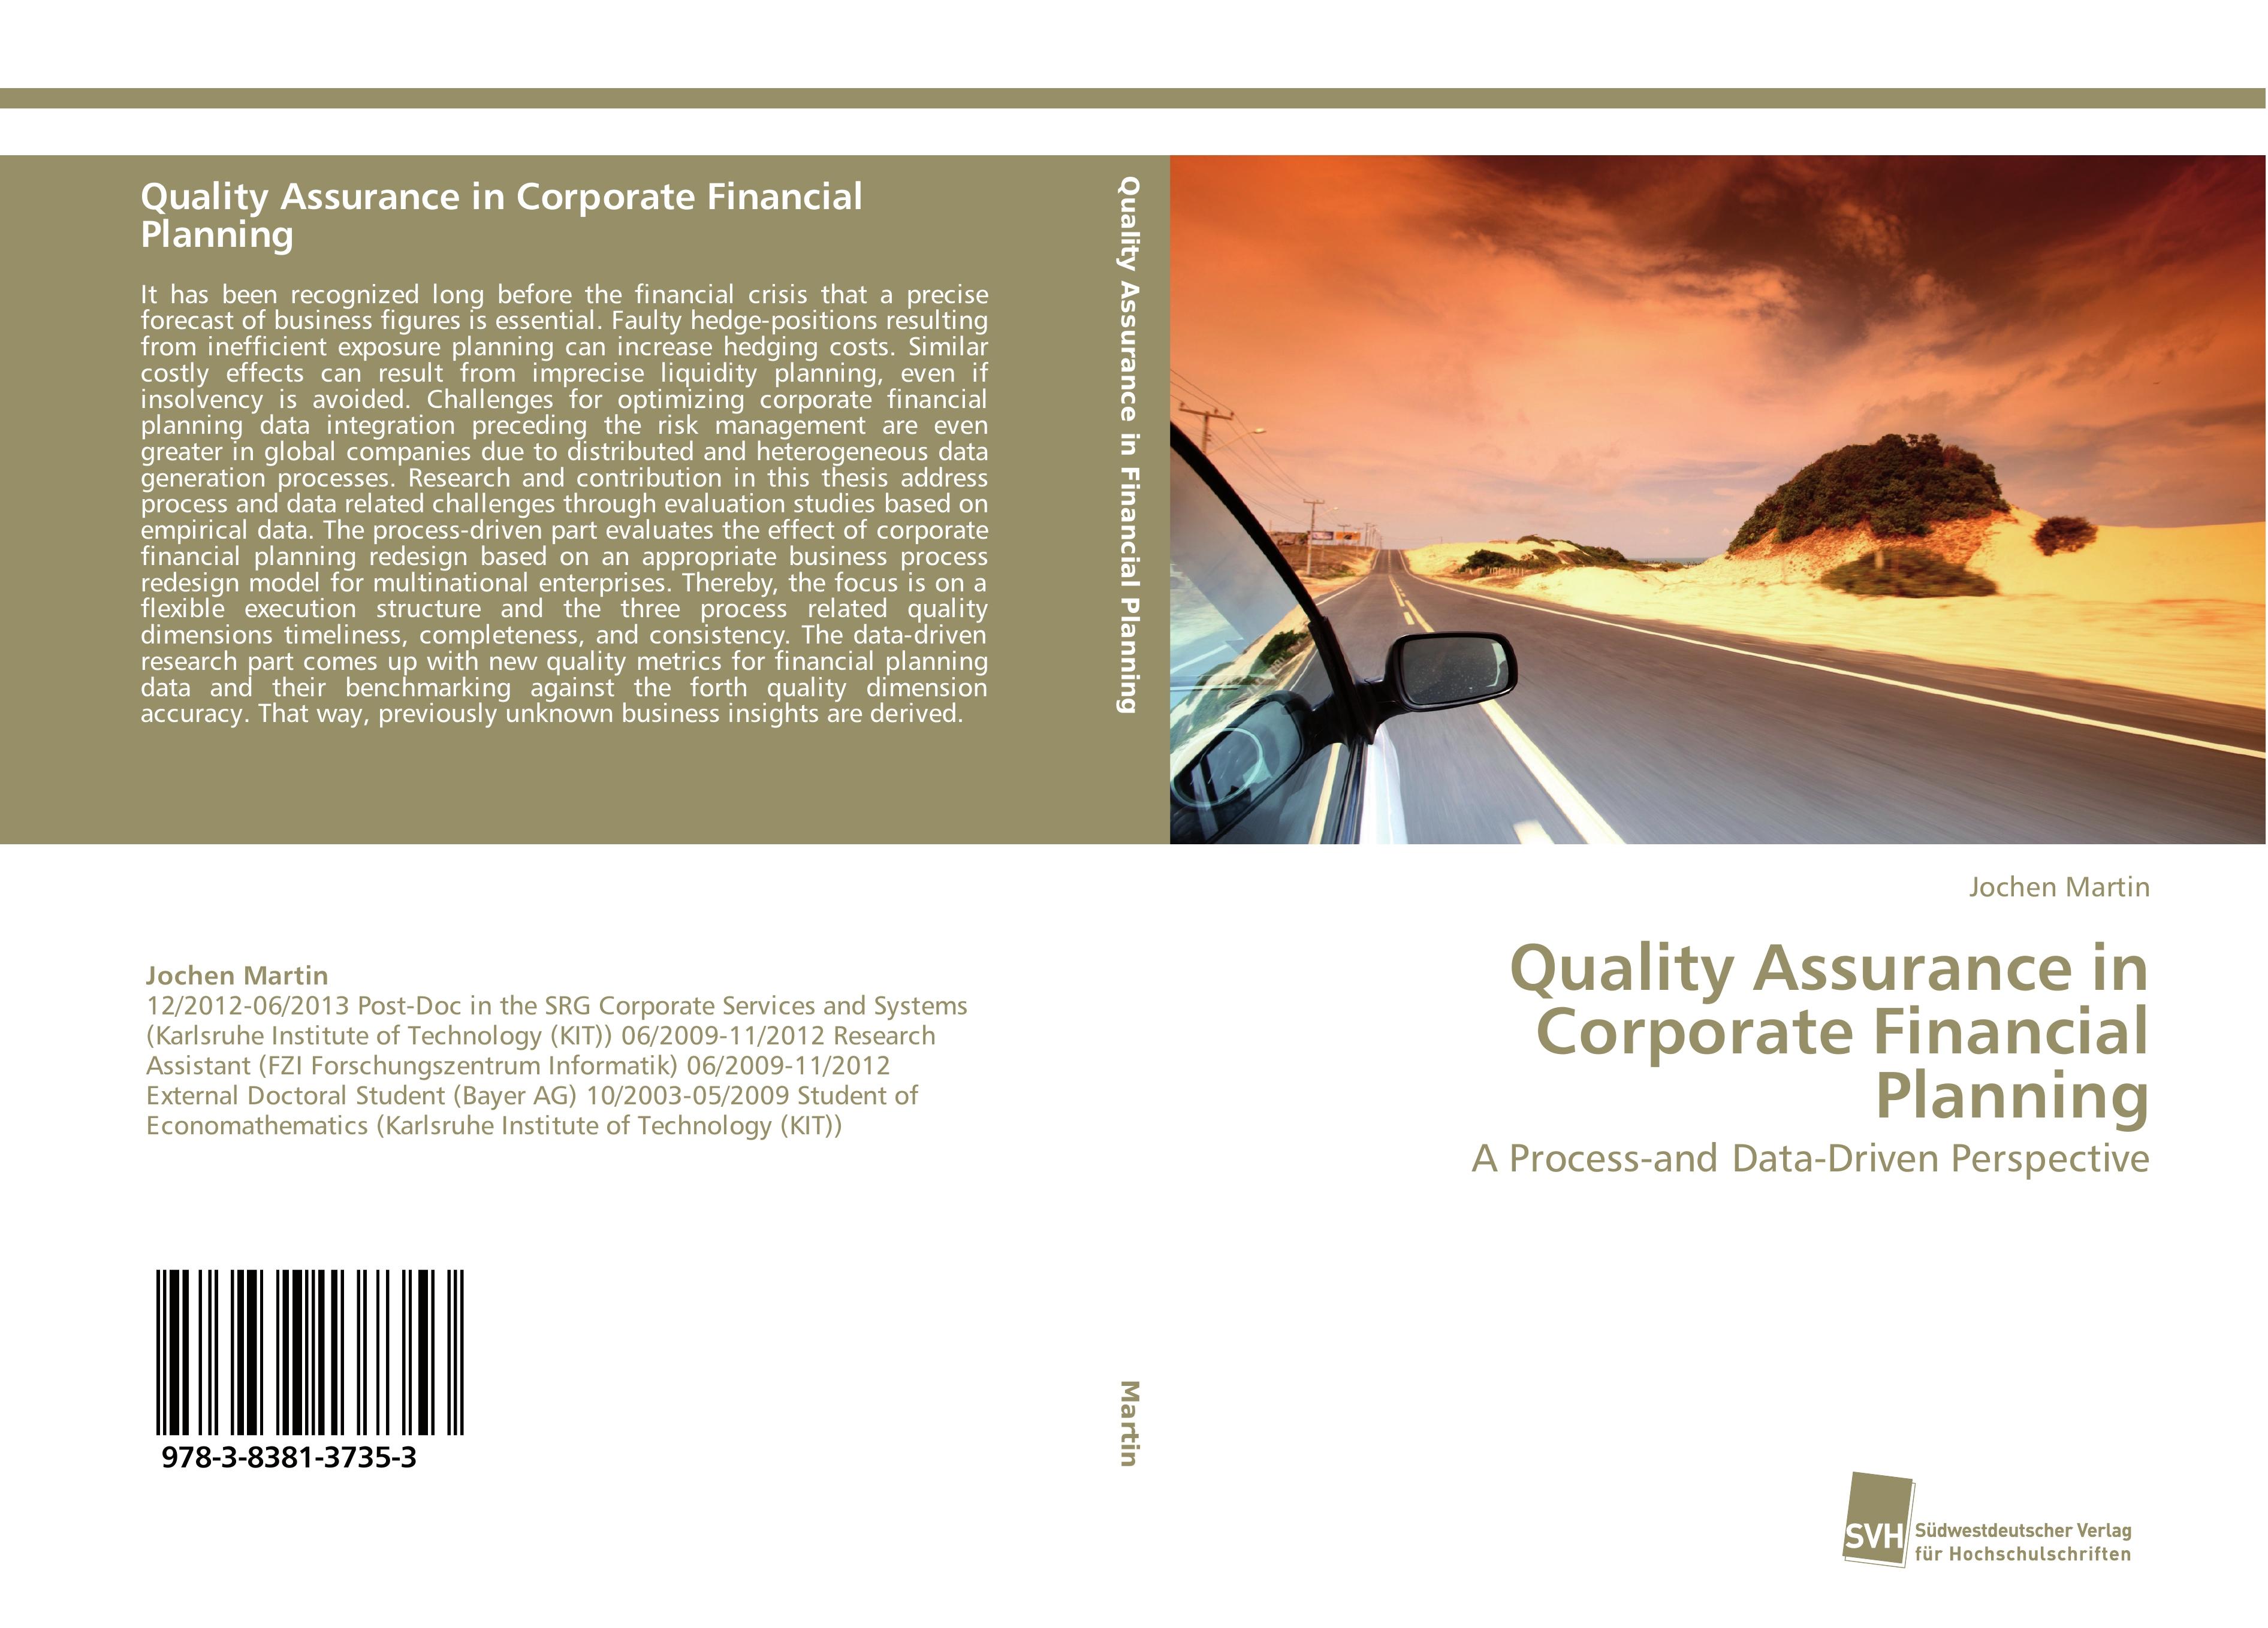 Quality Assurance in Corporate Financial Planning - Jochen Martin